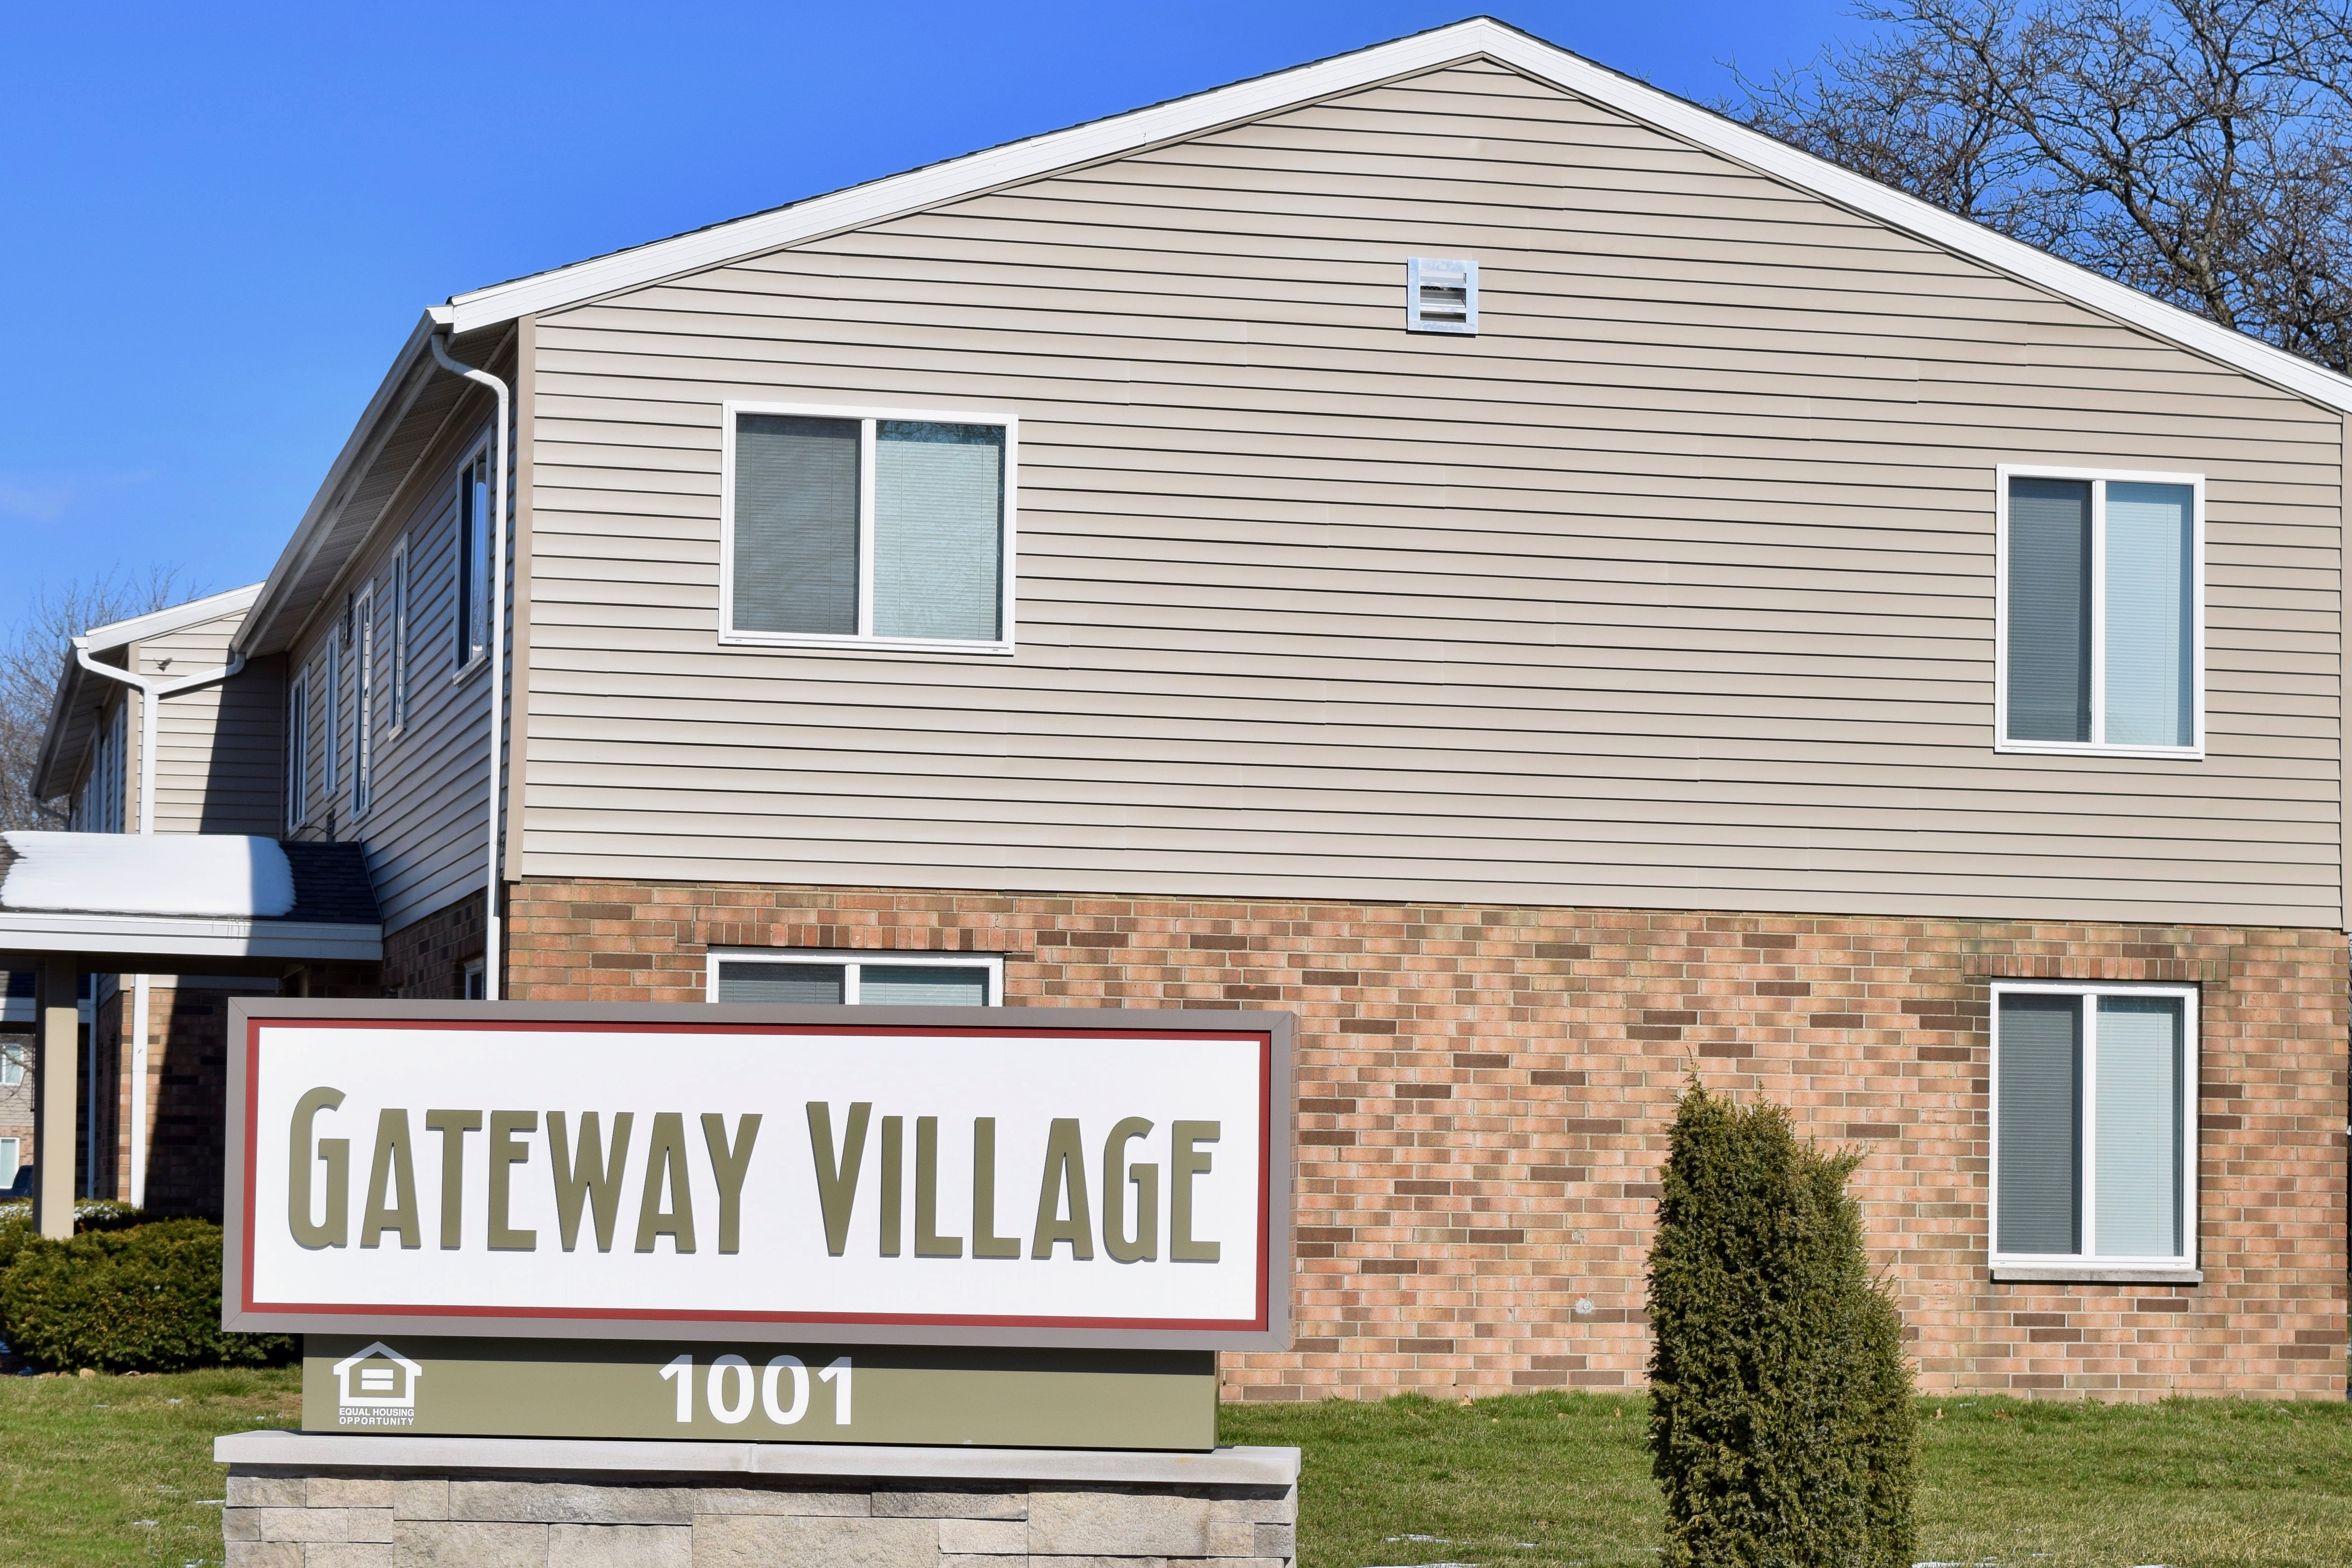 Cinnaire joins Hollander Development Corporation to celebrate Grand Re-opening of Gateway Village